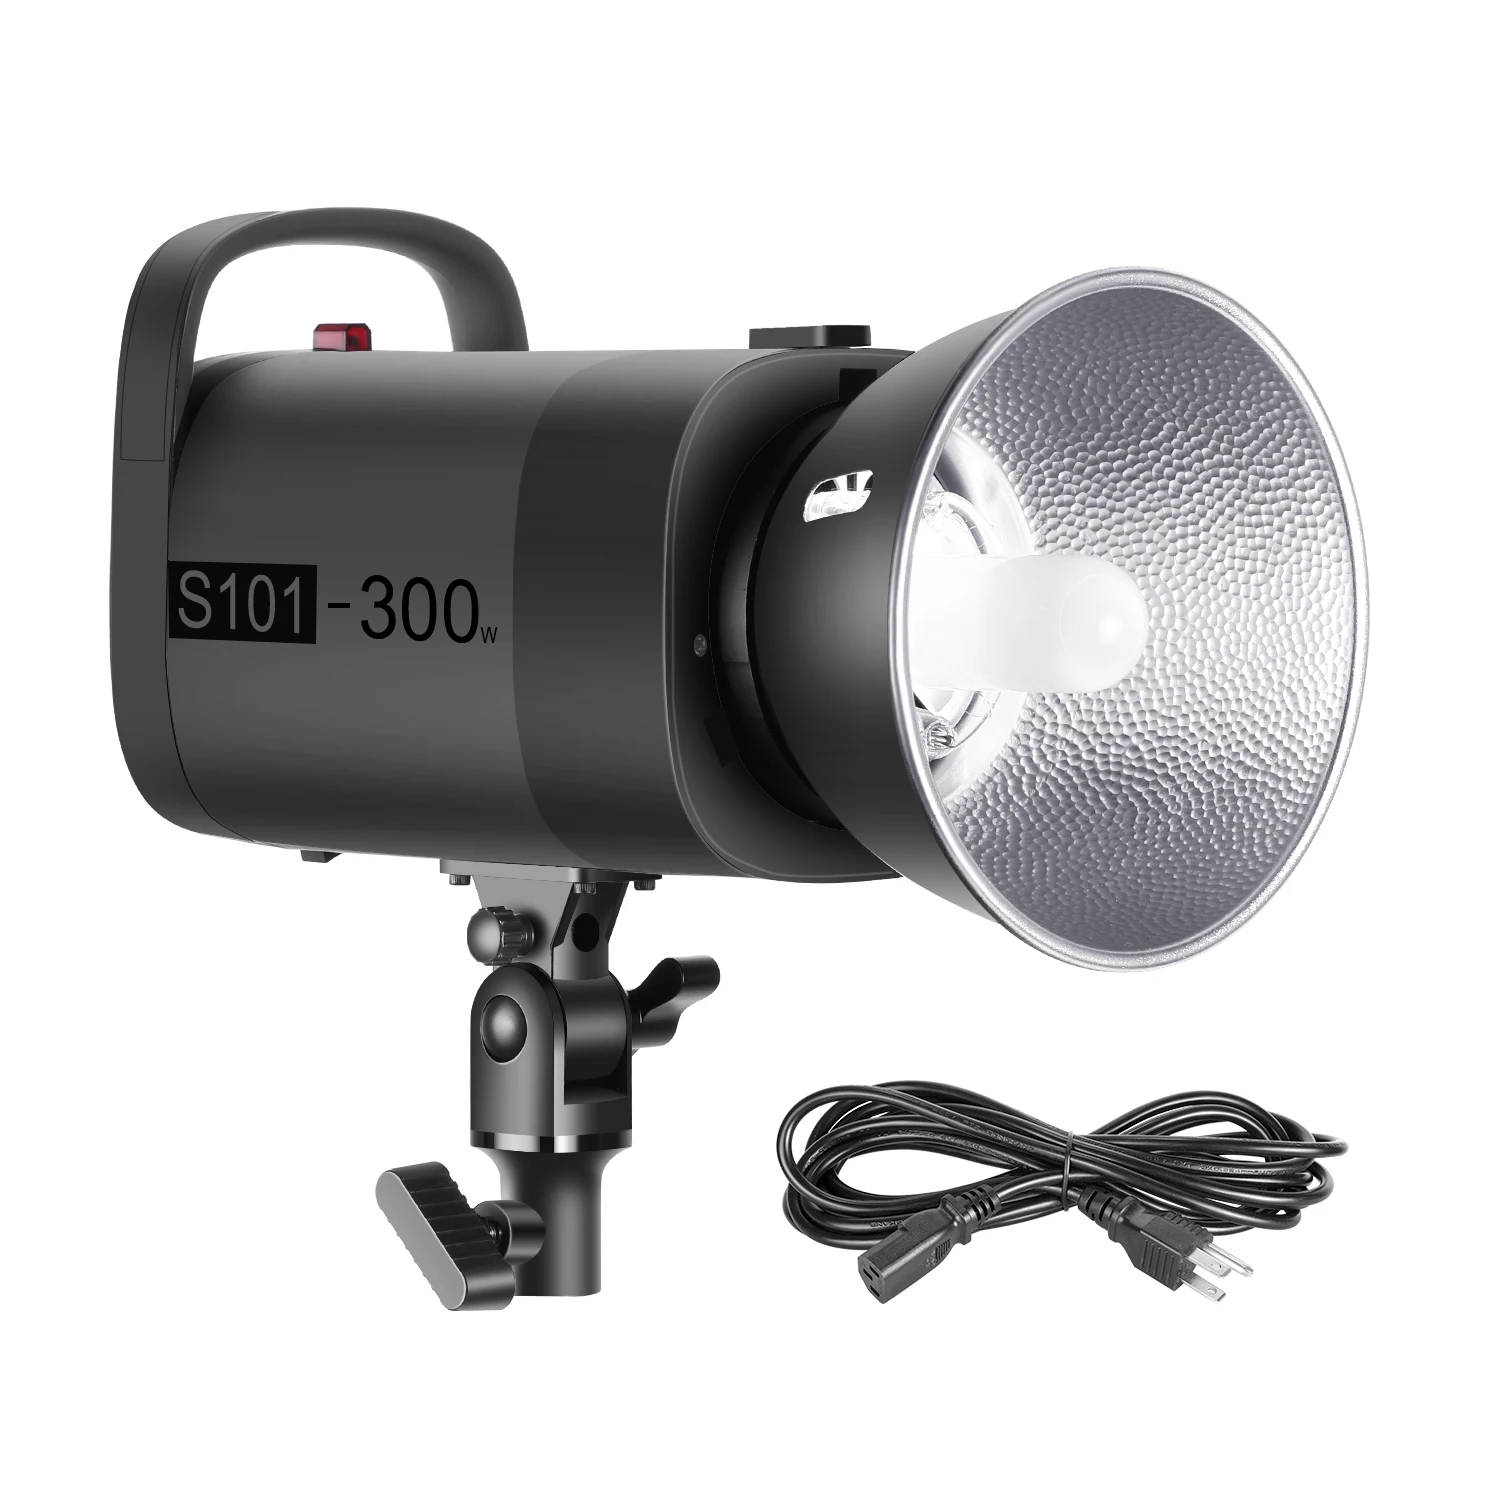 

Neewer S101-300W Professional Studio Monolight Strobe Flash Light 300W 5600K With Modeling Lamp, Aluminium Alloy